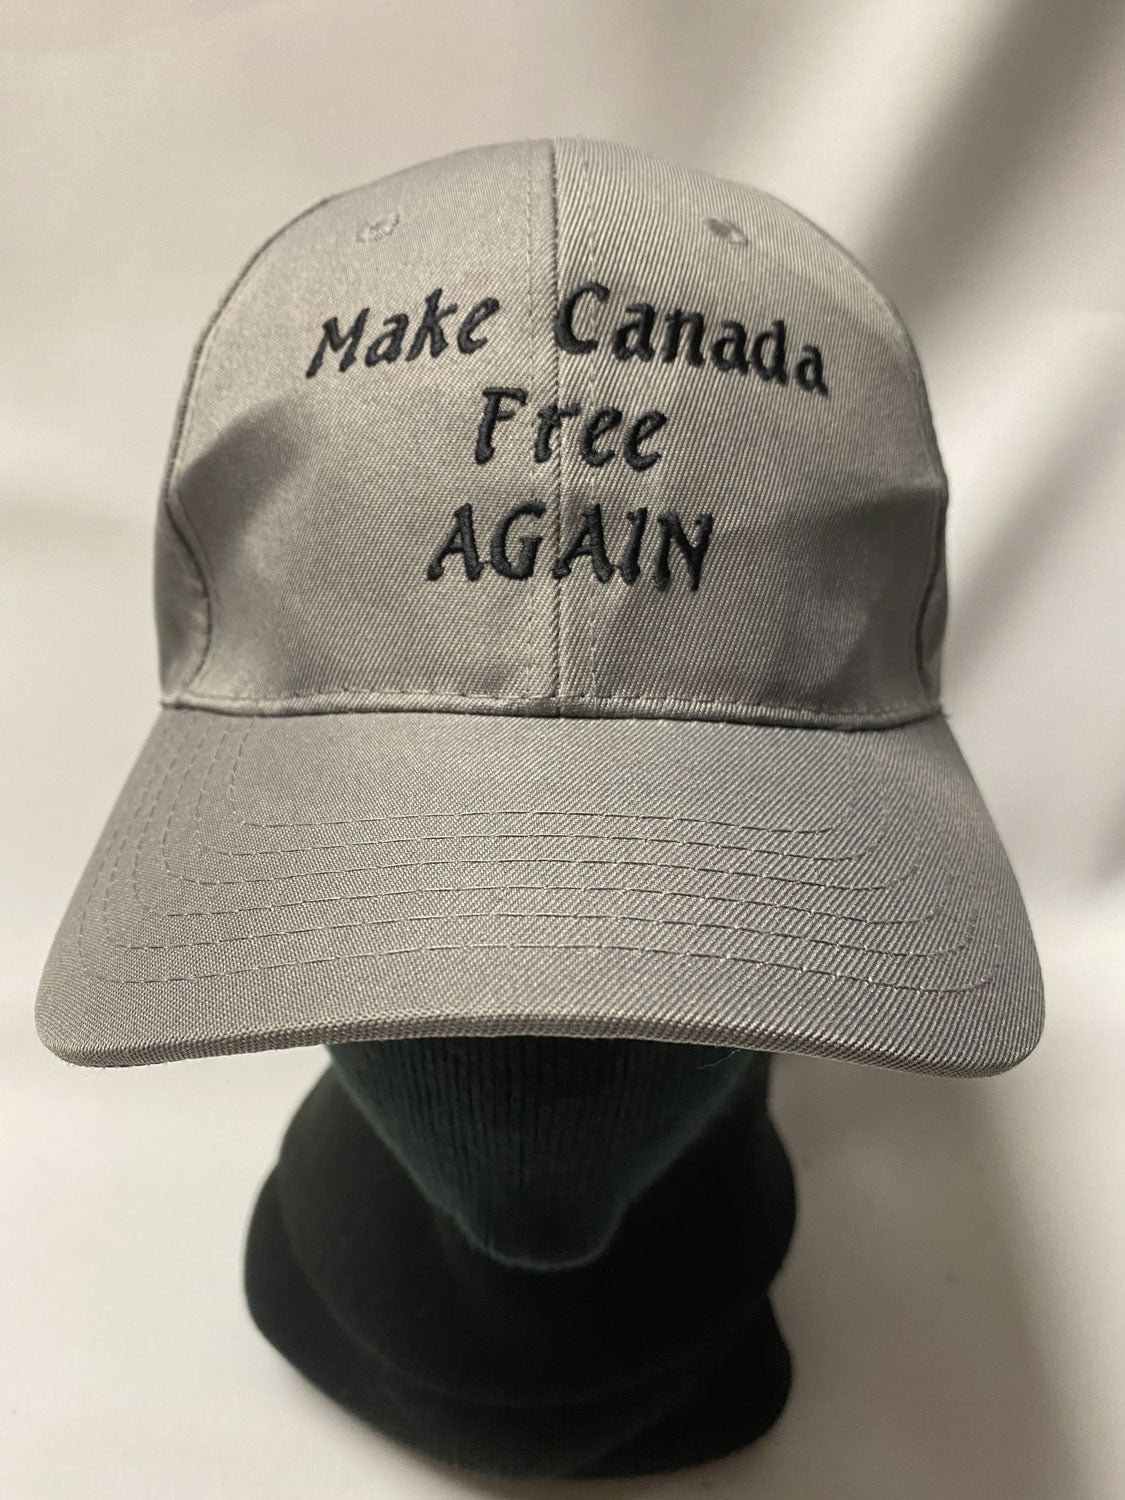 BALL CAP "MAKE CANADA FREE AGAIN" 2022 - black embroidery on grey